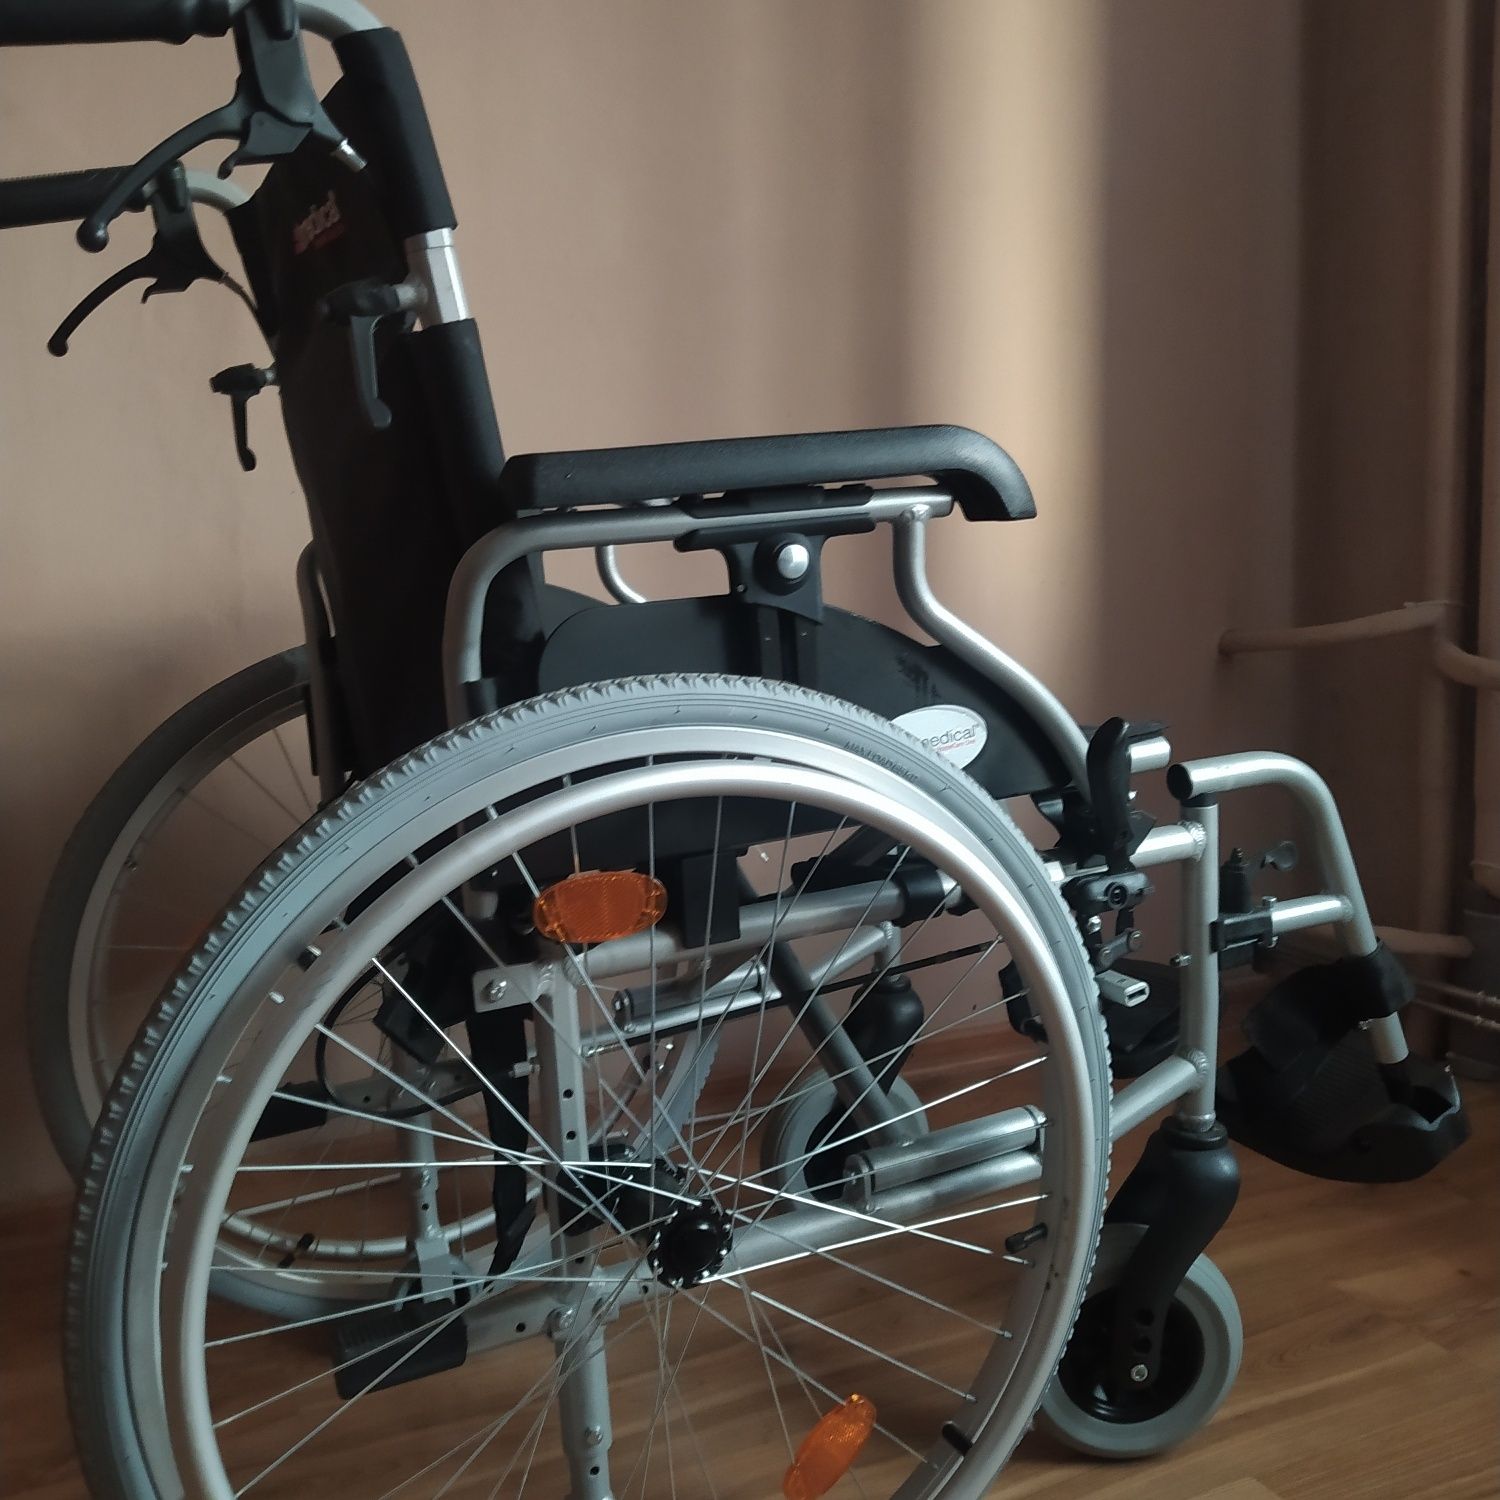 Wózek inwalidzki ArMedical